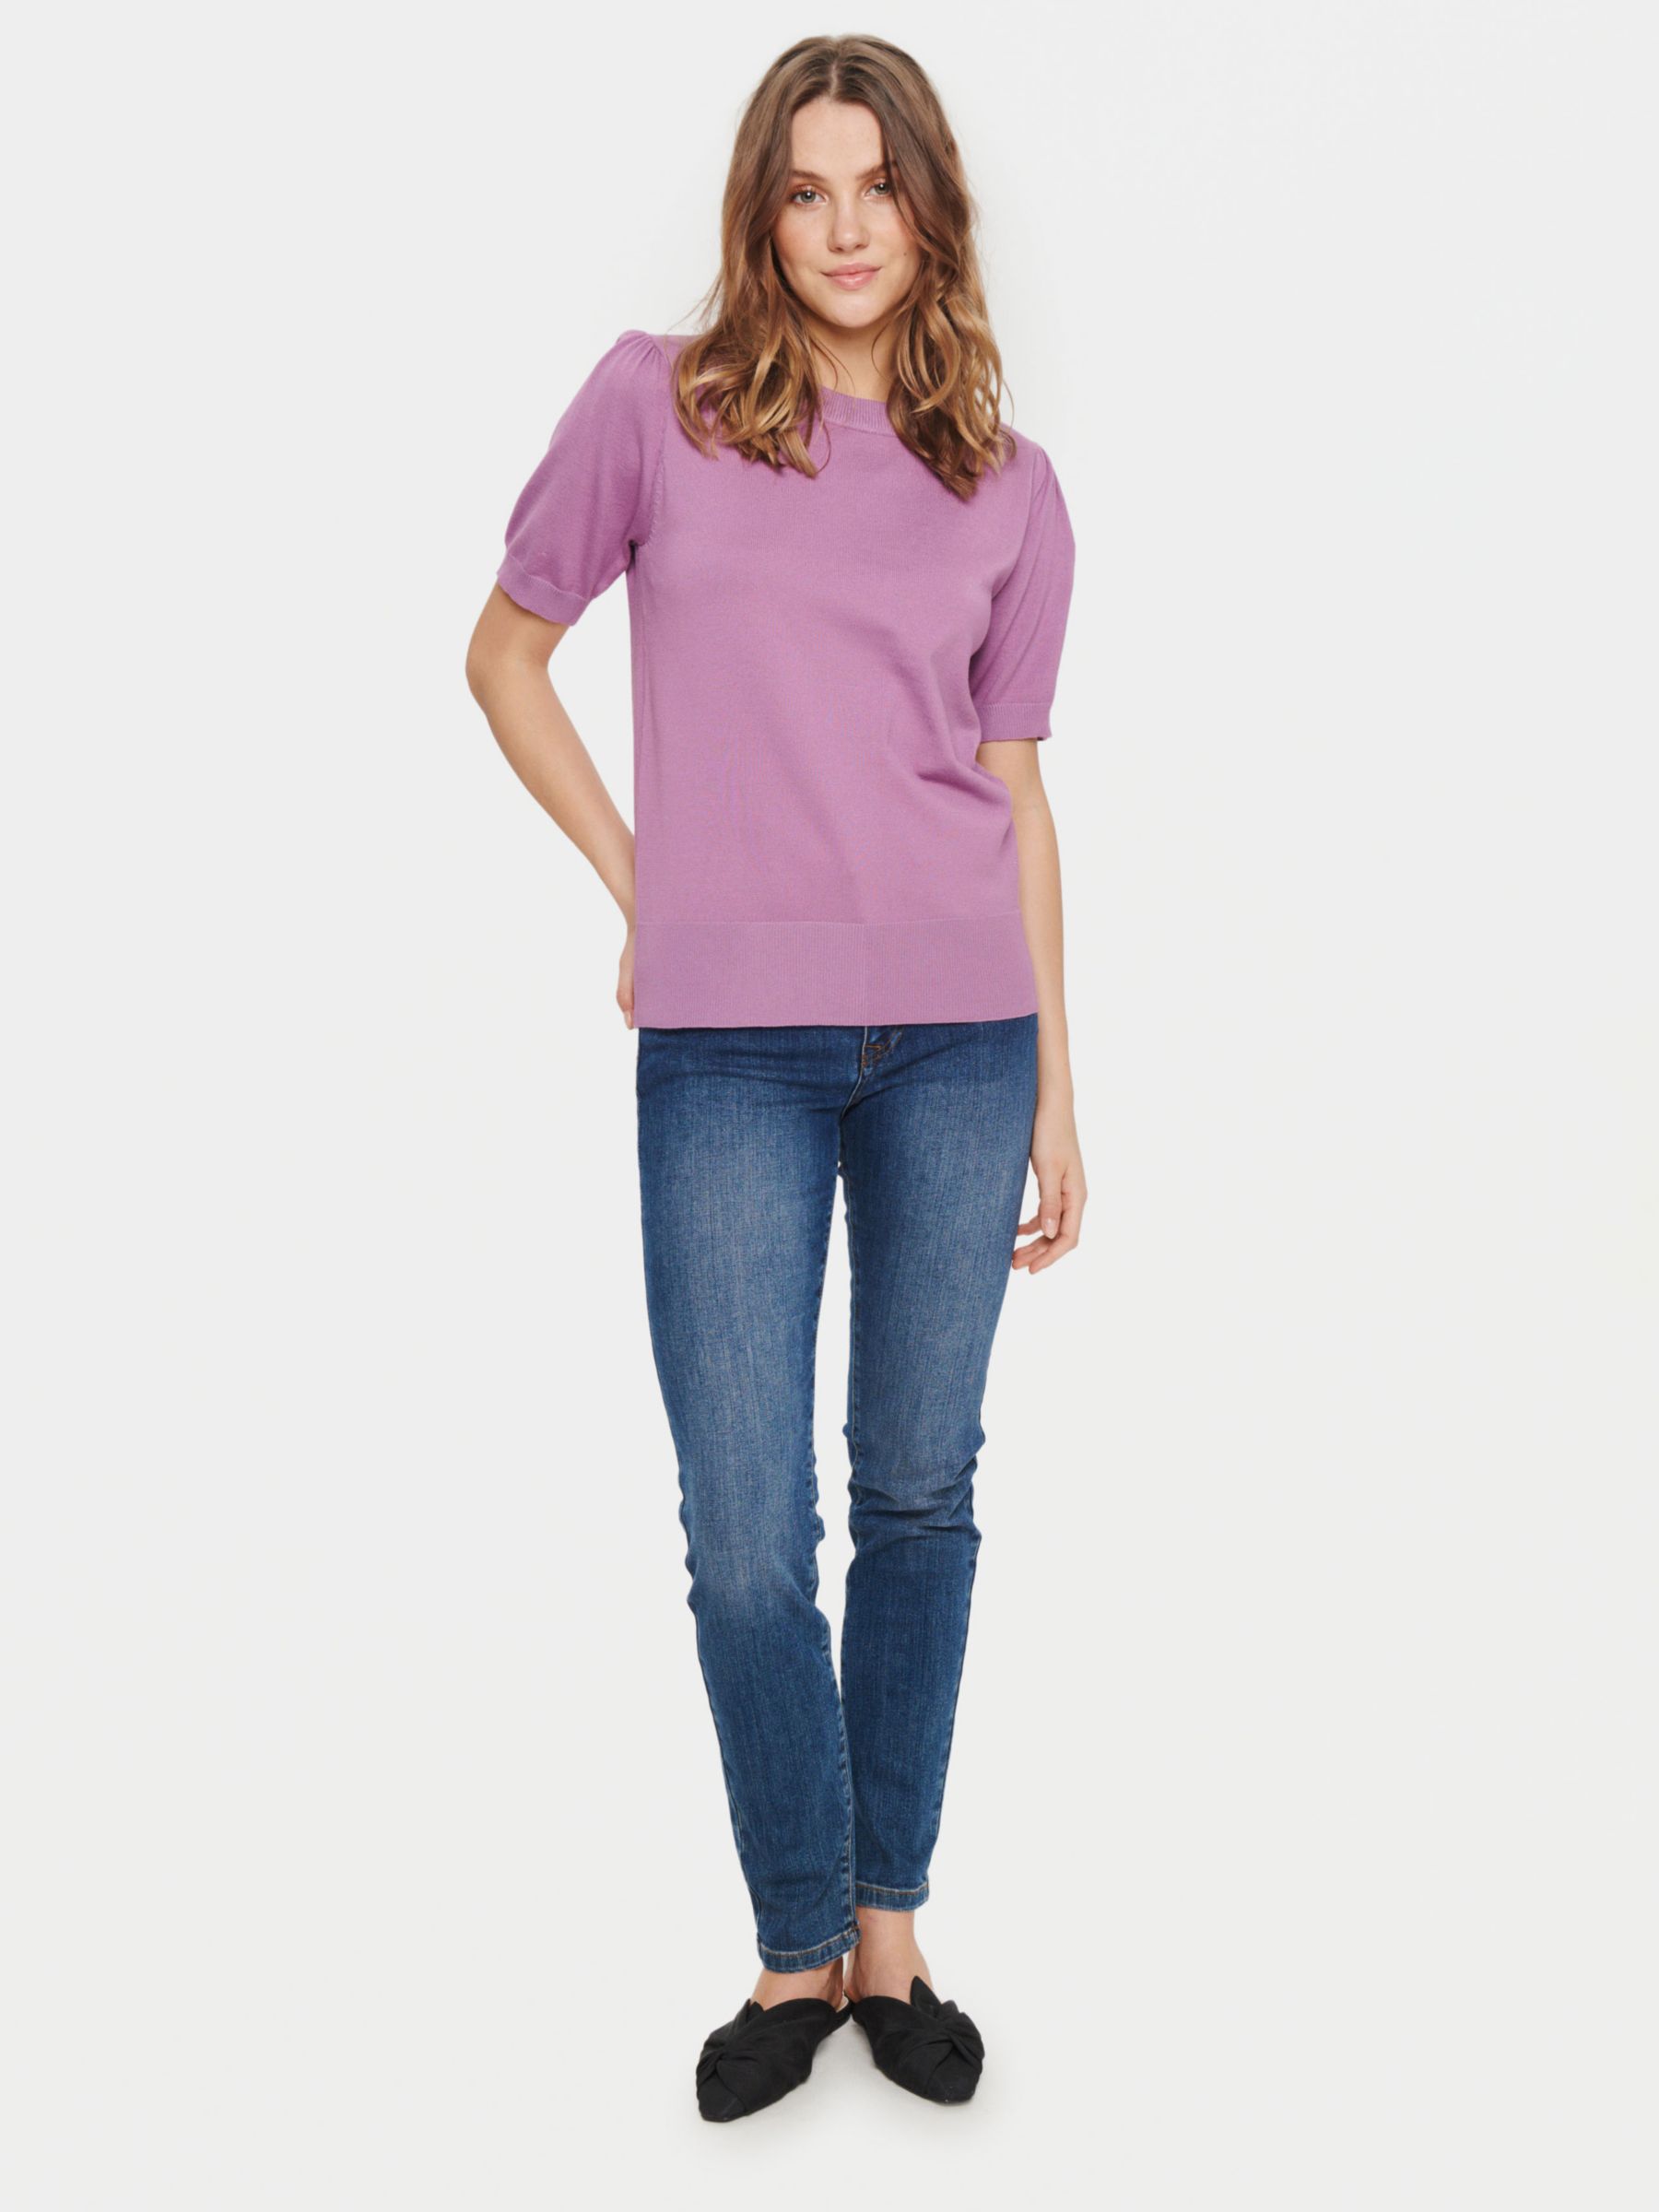 Buy Saint Tropez Mila Pullover T-Shirt Online at johnlewis.com